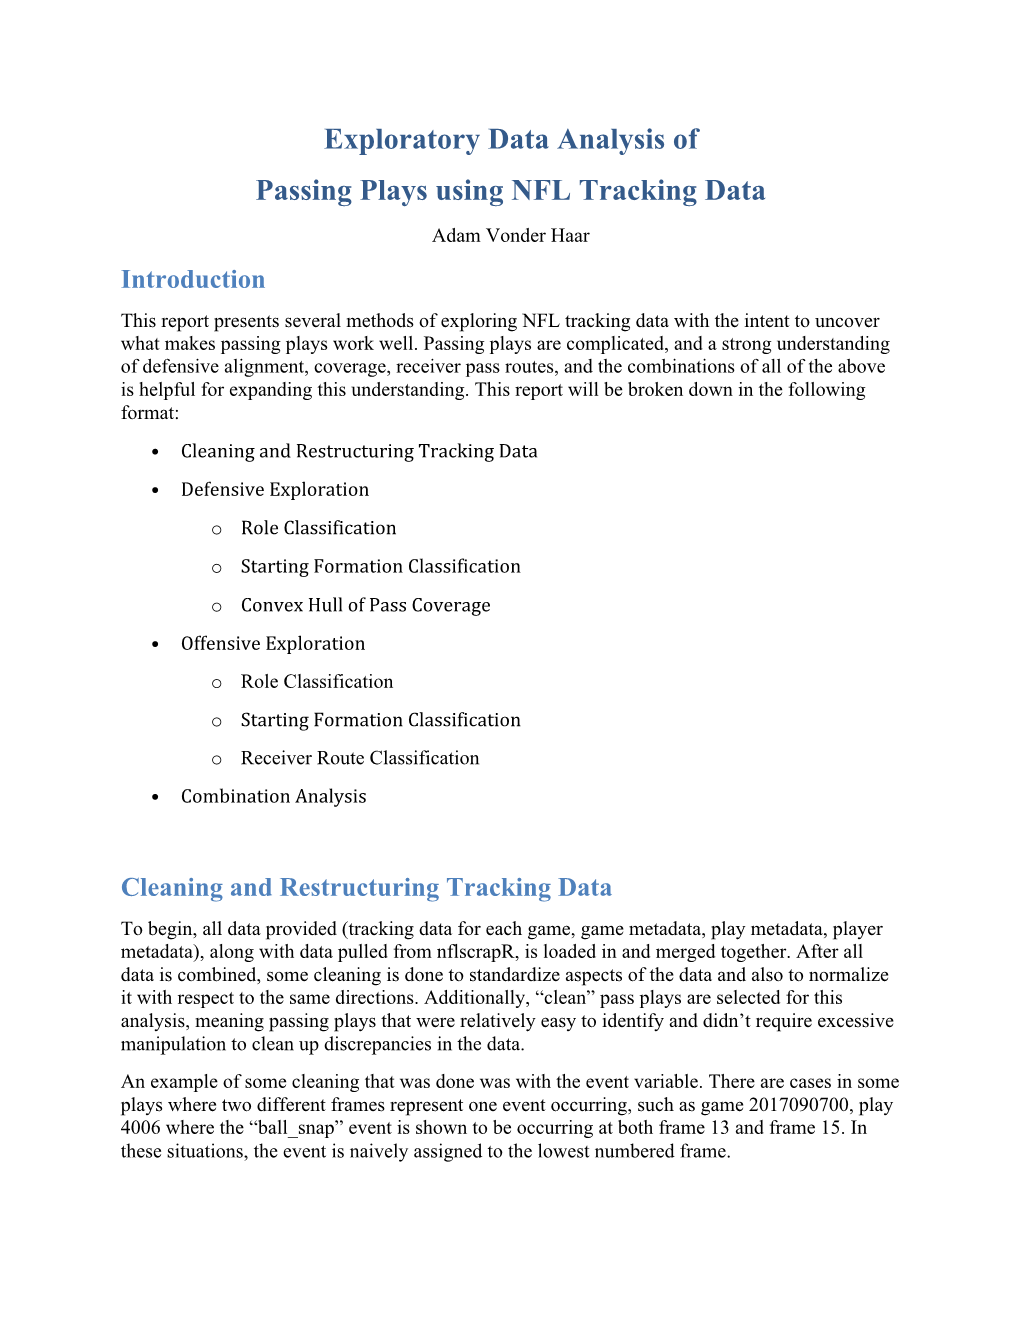 Exploratory Data Analysis of Passing Plays Using NFL Tracking Data